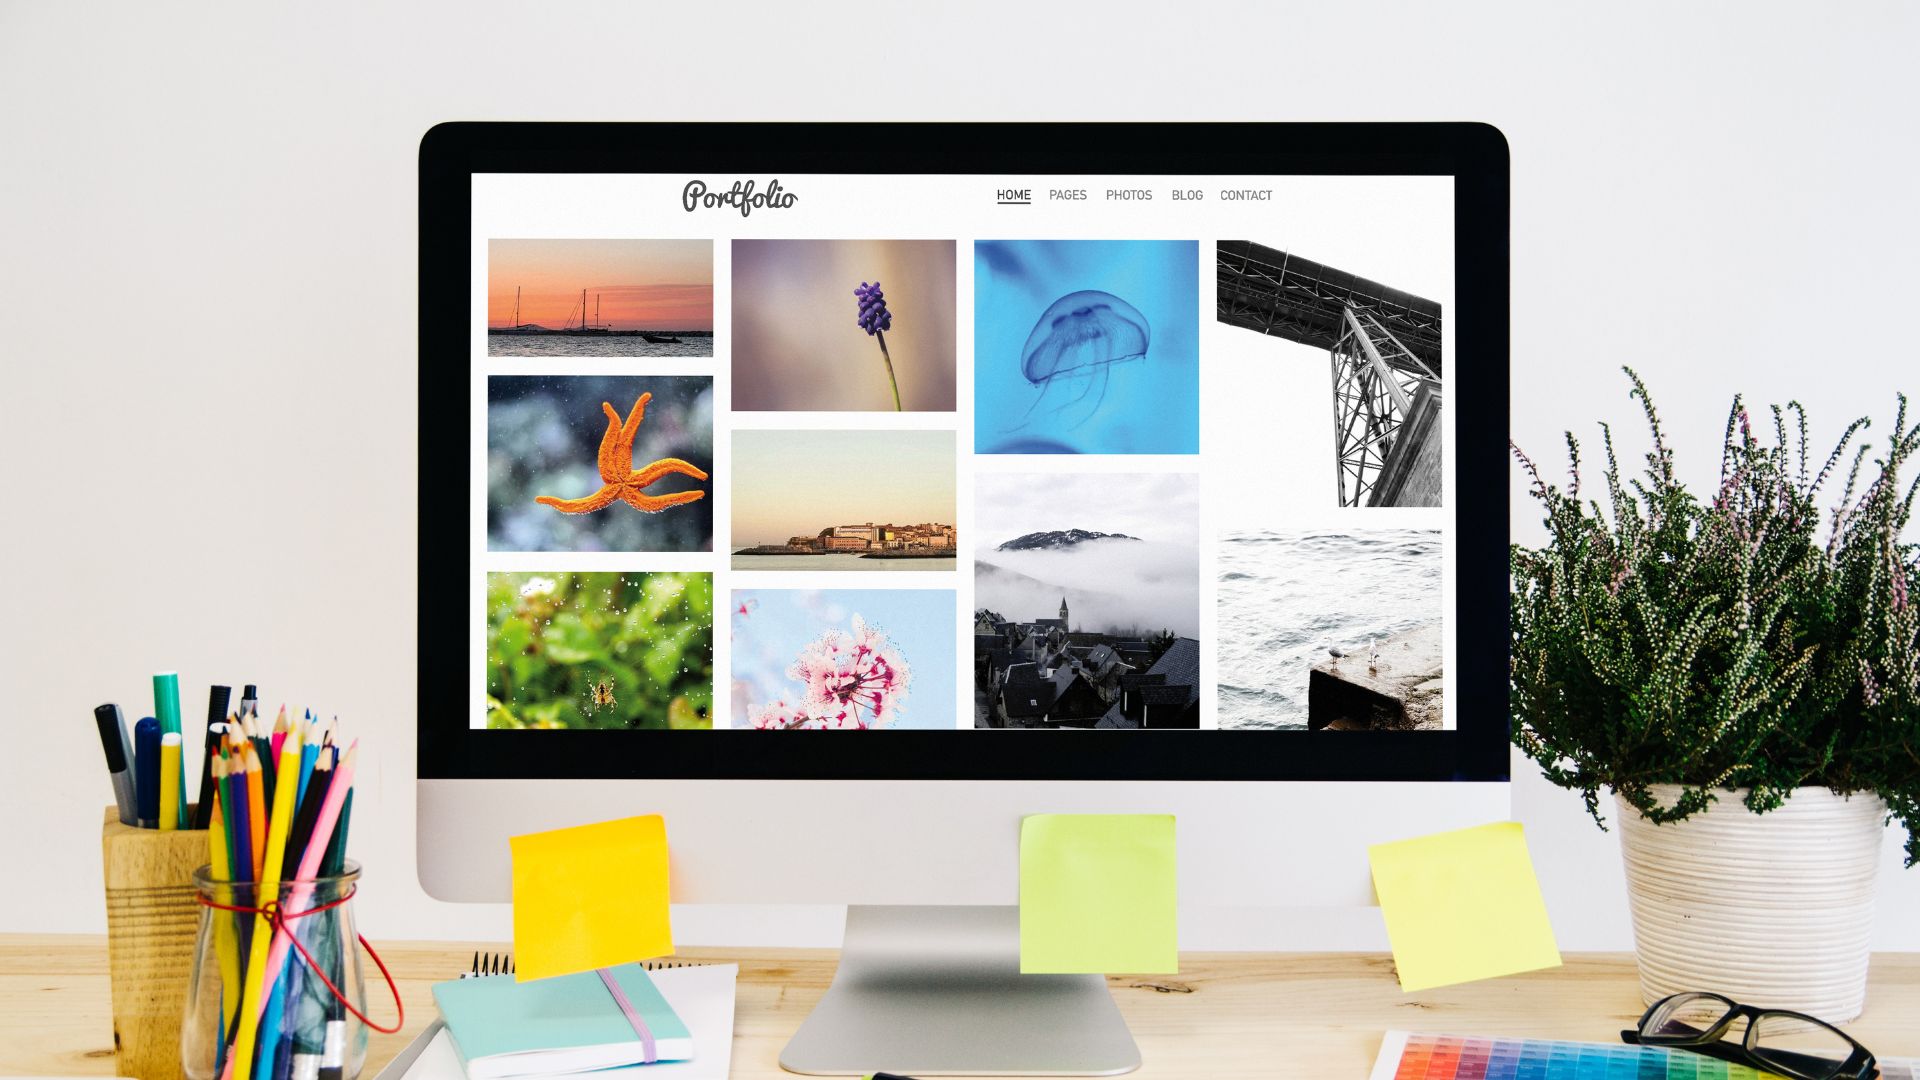 Photography Website Templates – Build a Stunning Online Portfolio